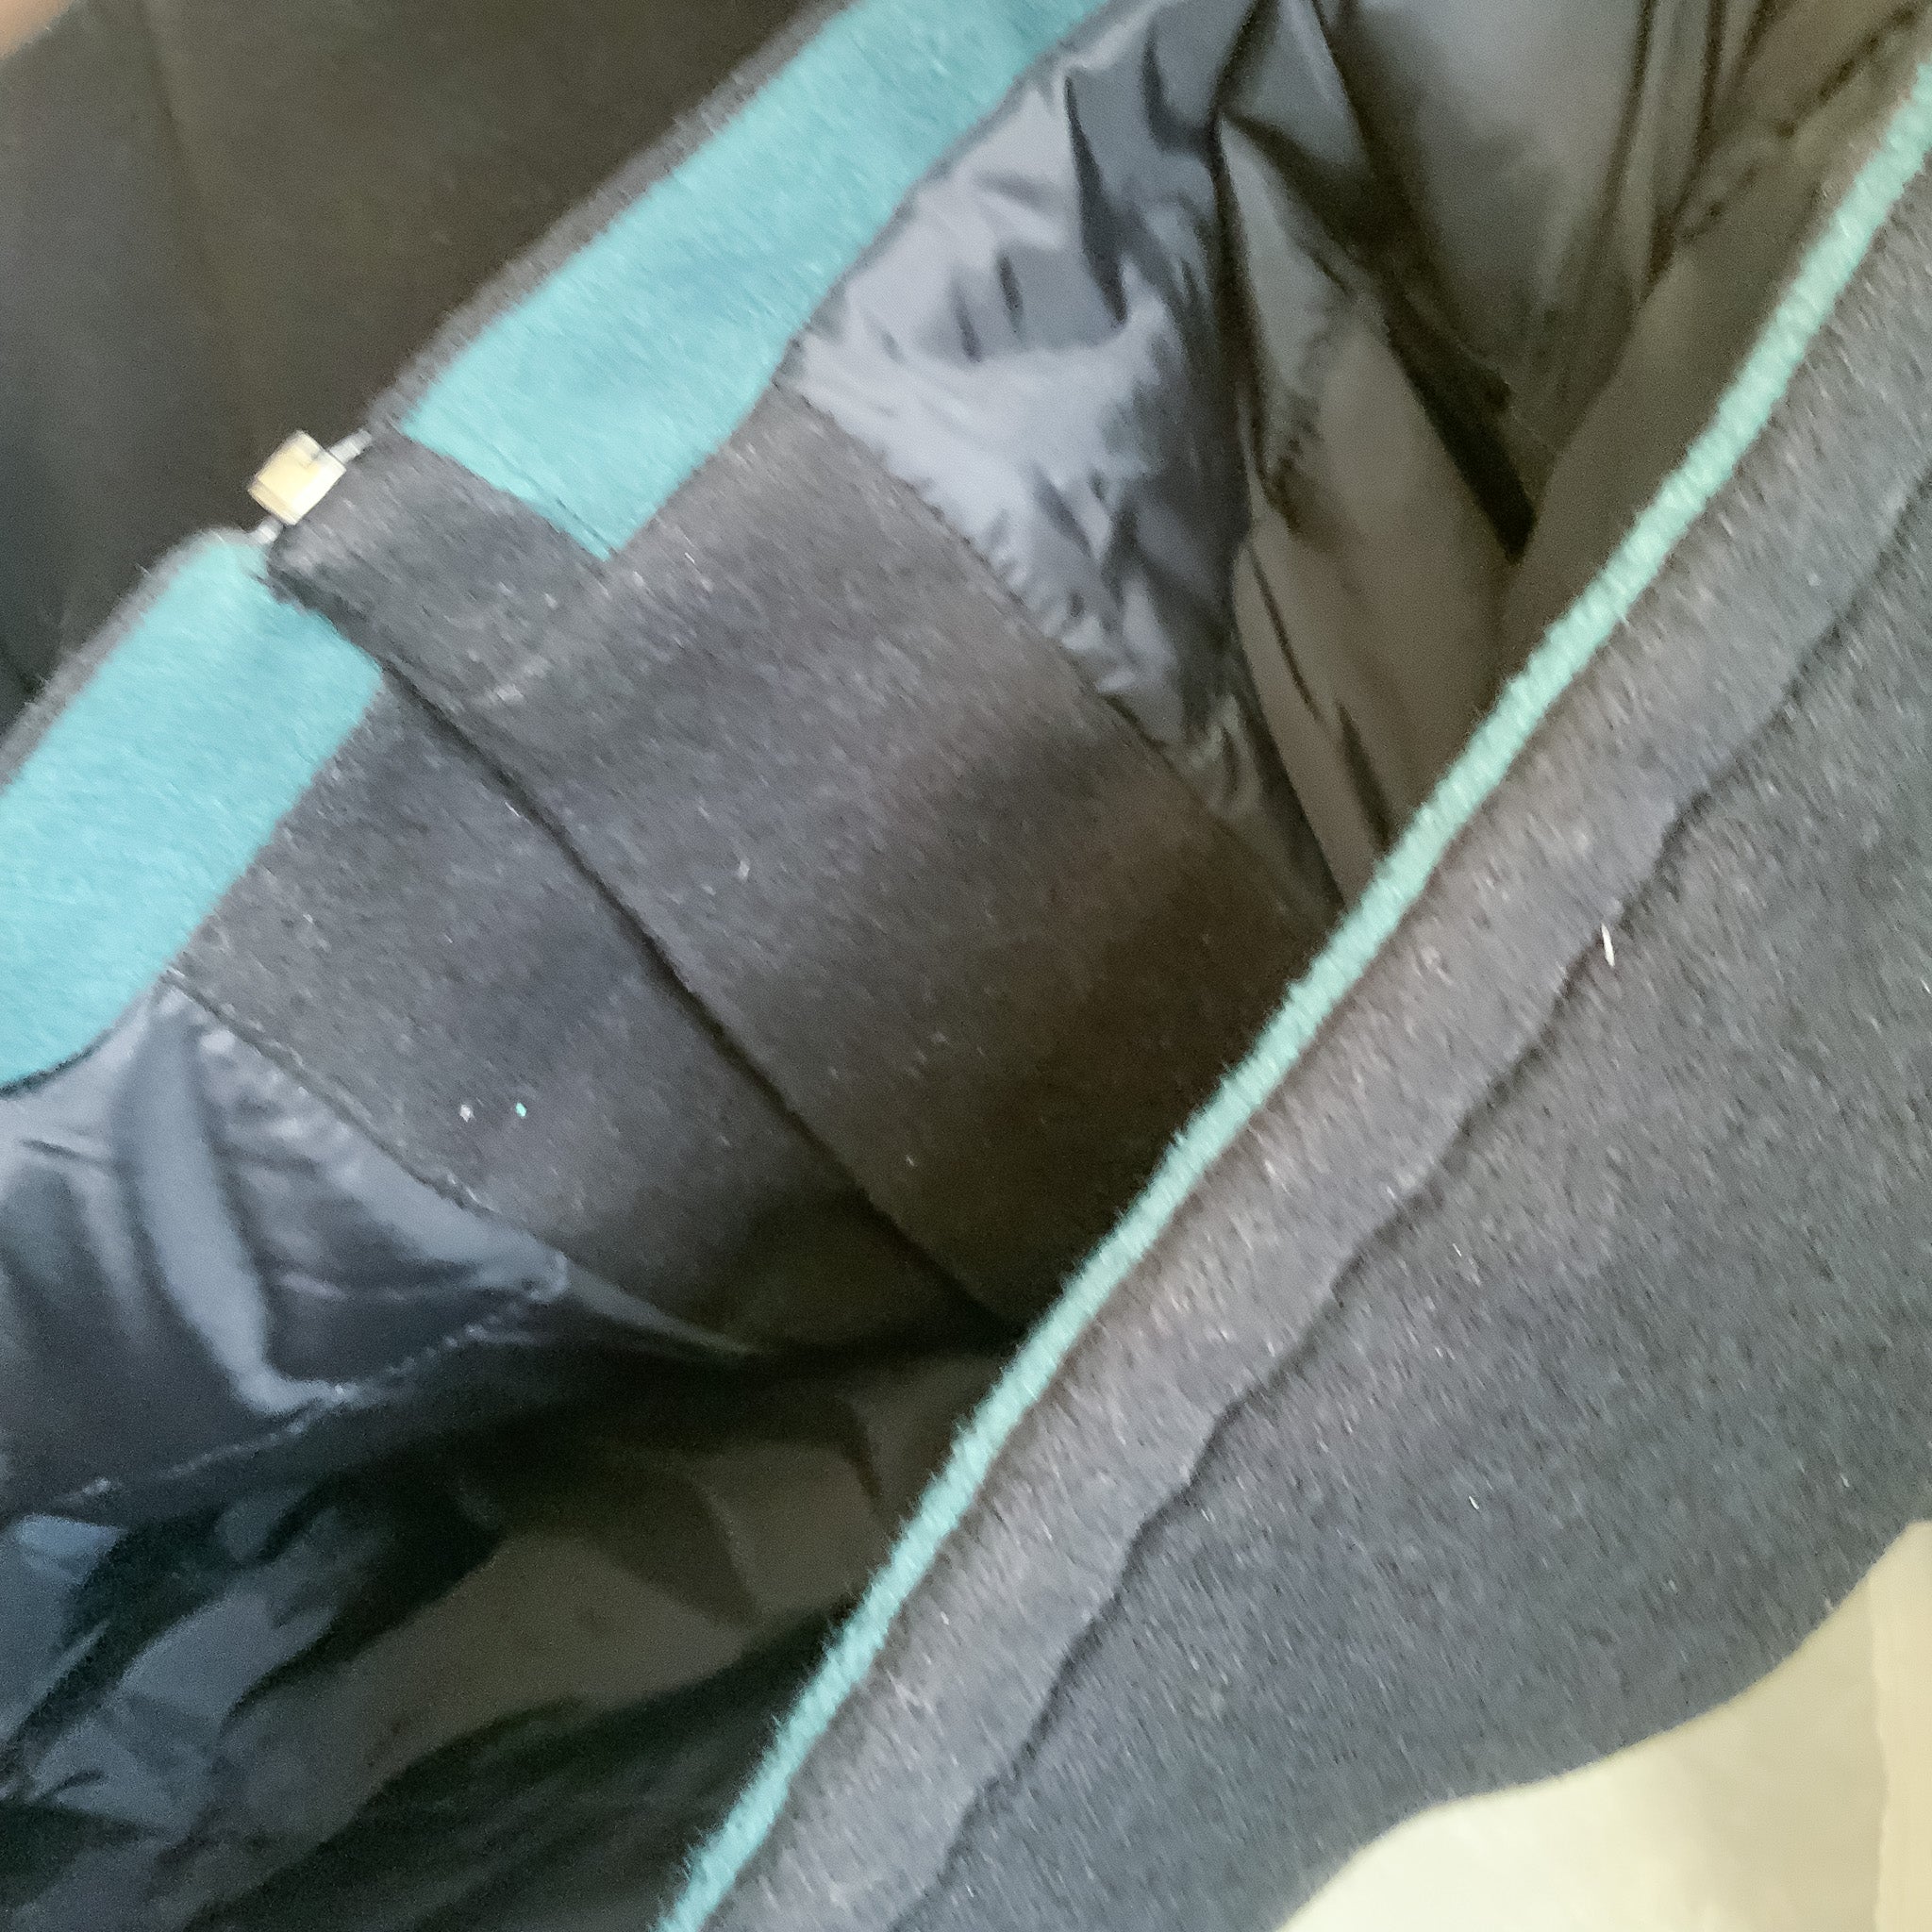 RHYTHM Black Green Long Sleeves Zip Up Jacket - Size 8